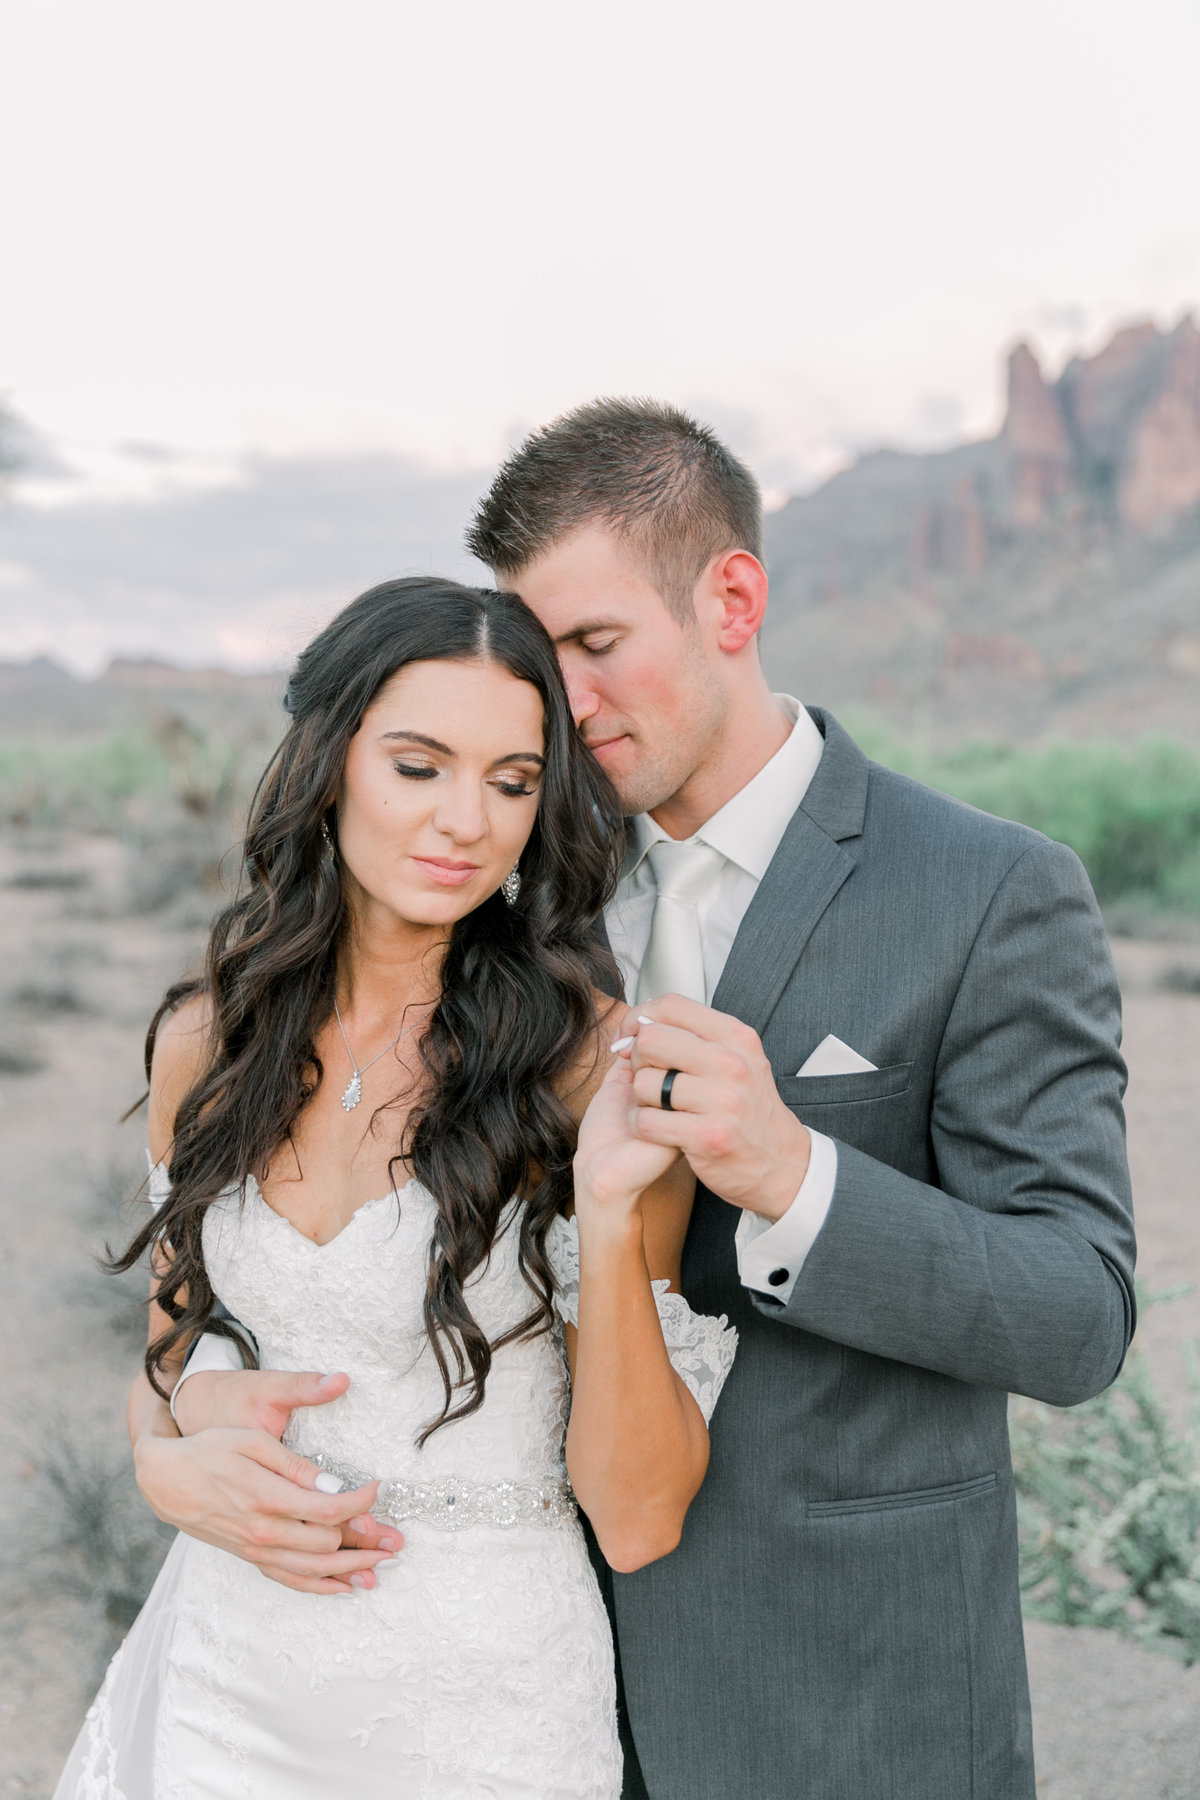 Karlie Colleen Photography - Arizona Wedding - The Paseo Venue - Jackie & Ryan -700